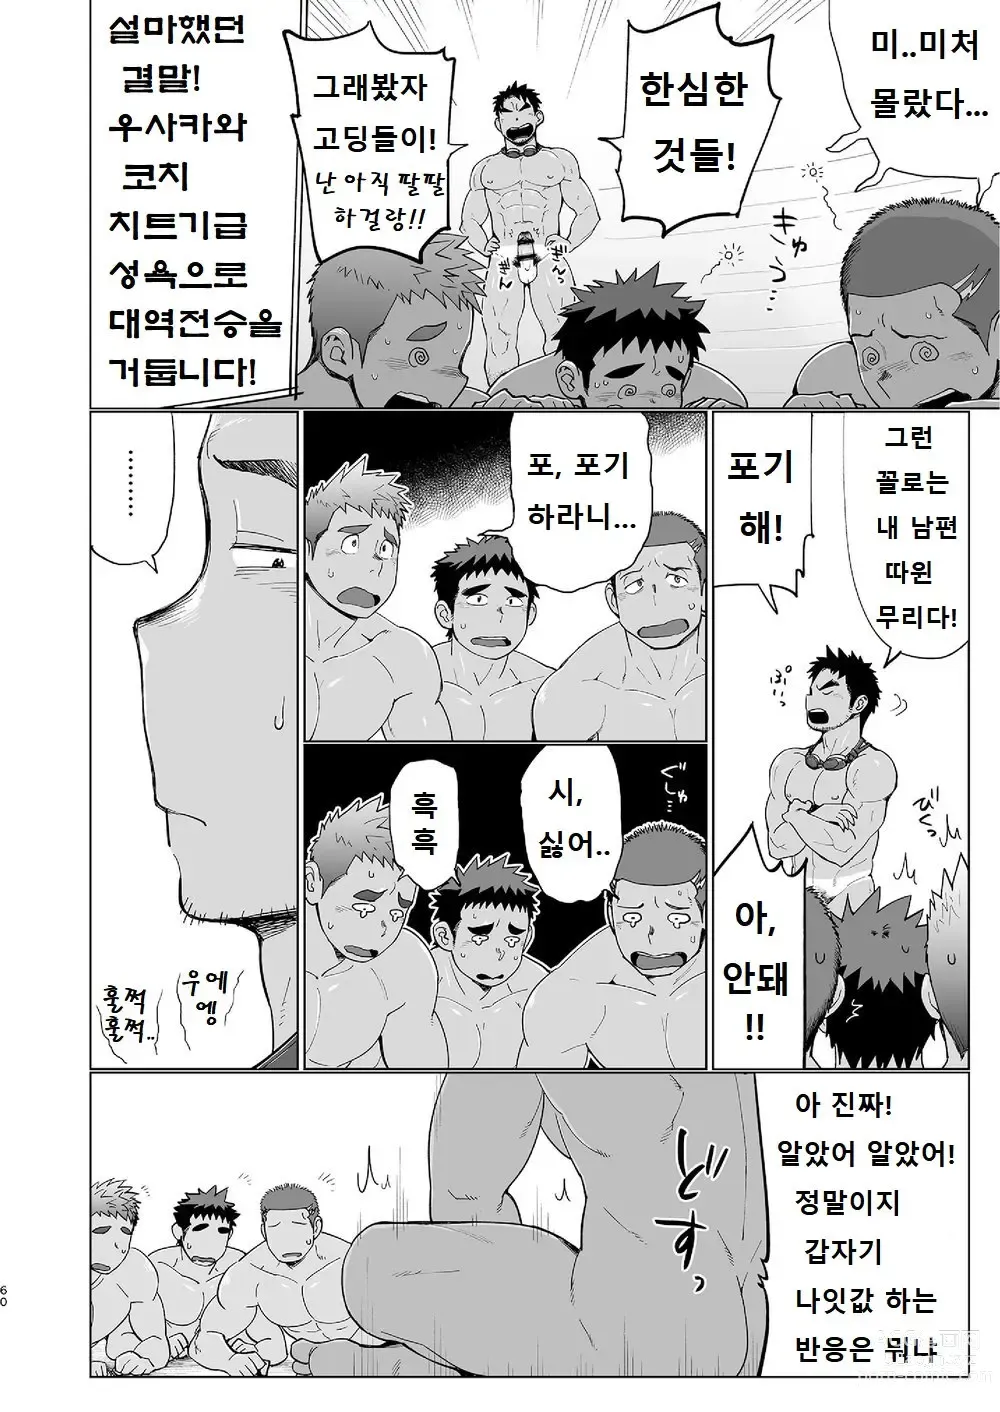 Page 59 of doujinshi 코치가 너무 꼴릿해서 수영 따위 할 때가 아닌 걸